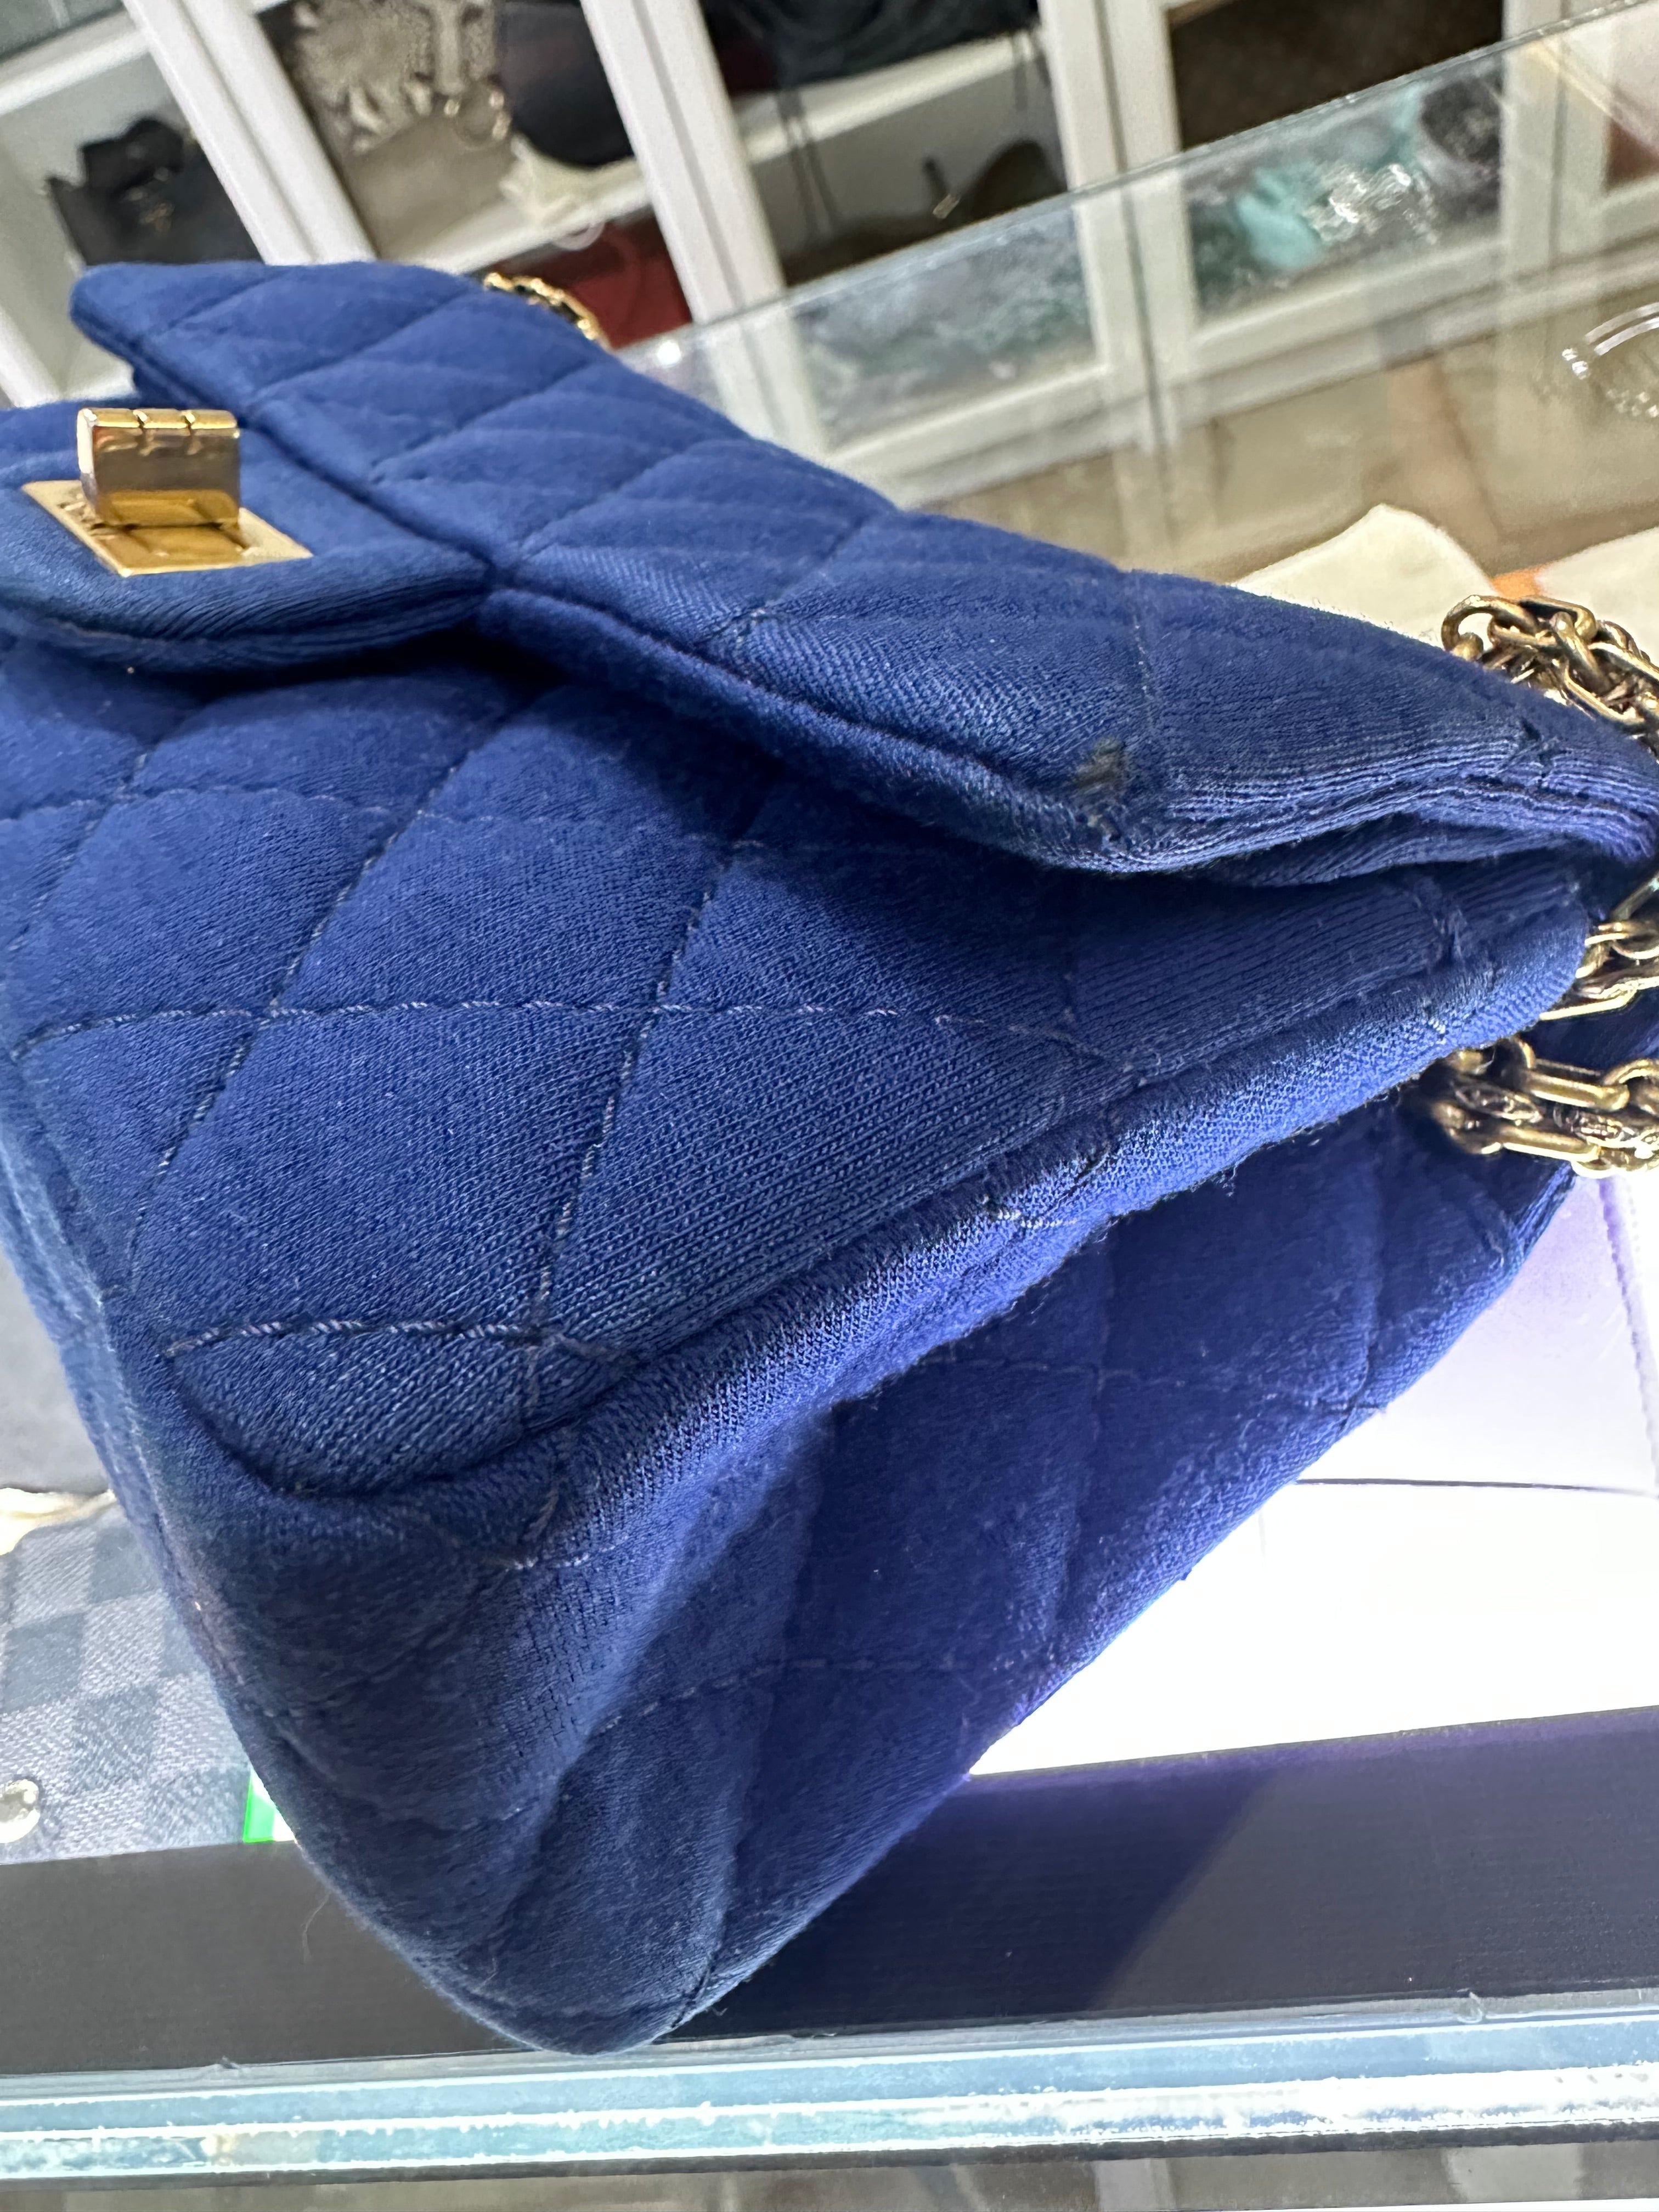 Chanel Mini 2.55 Reissue Denim Blue & Aged Gold Hardware Series 20 | Purse Maison Luxury Bags Shop